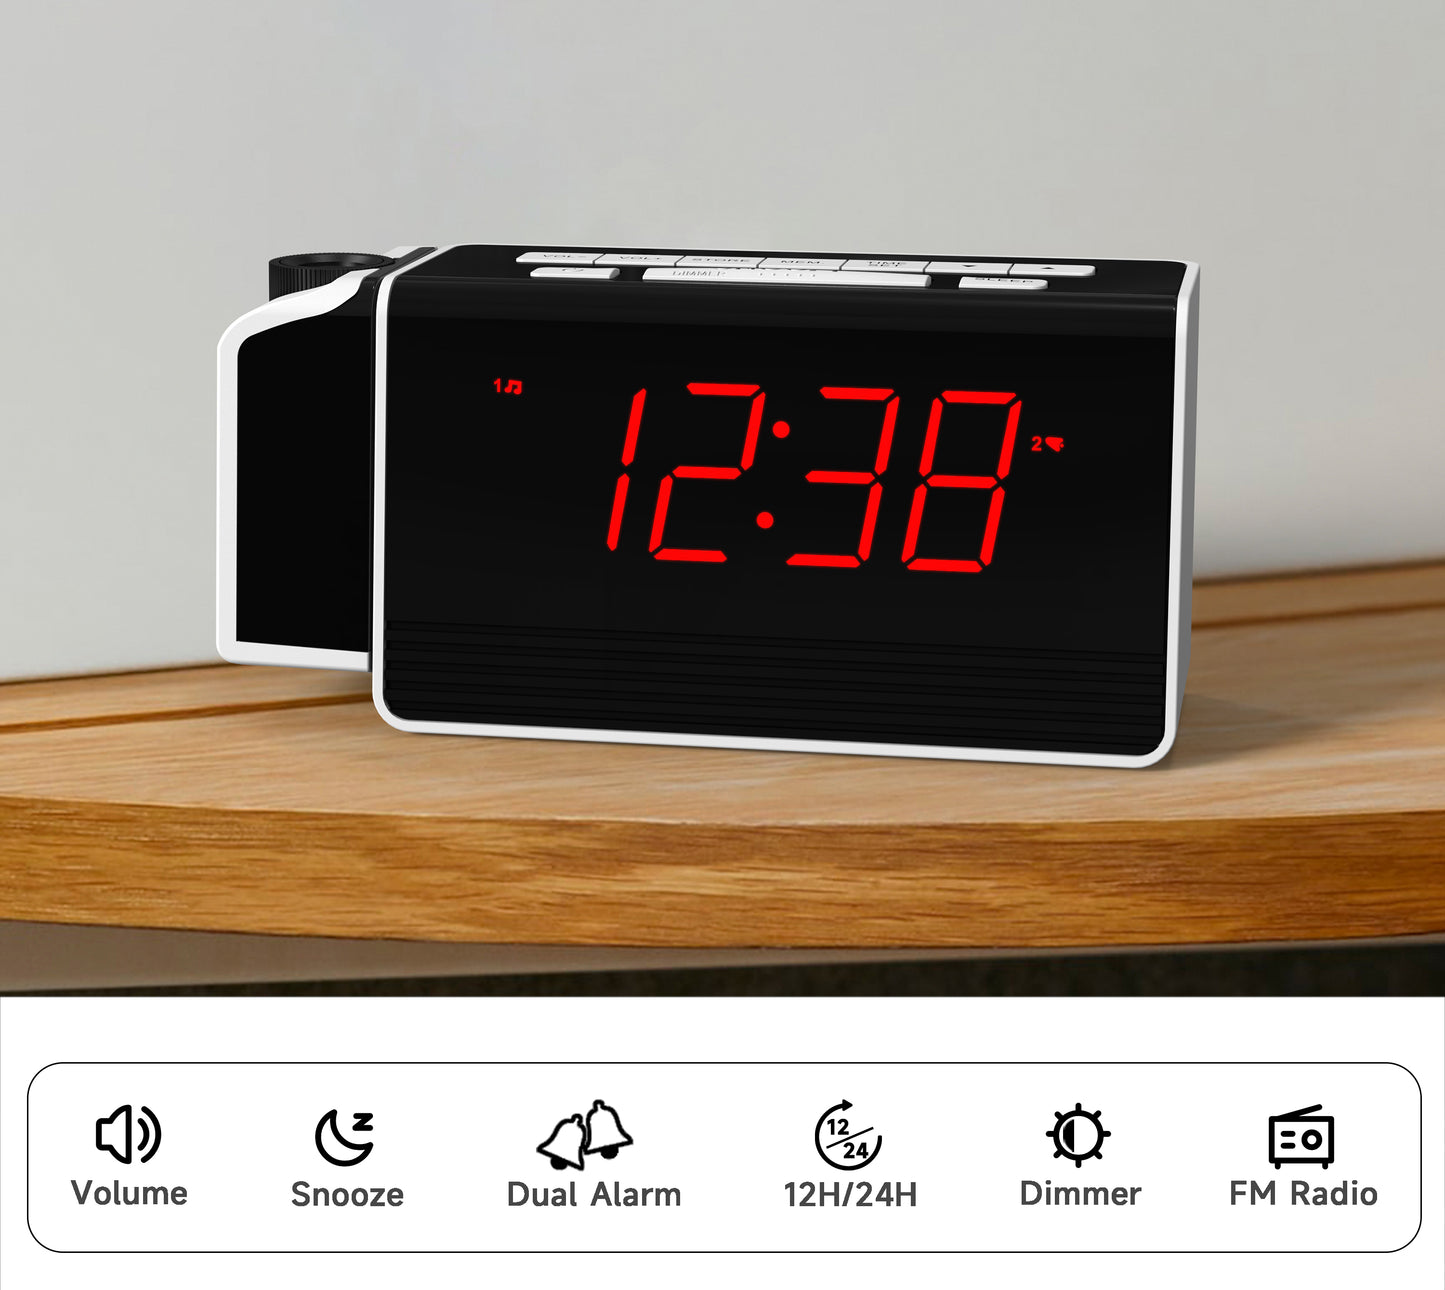 Alarm Clock Radio with Projector iTOMA CKS512U